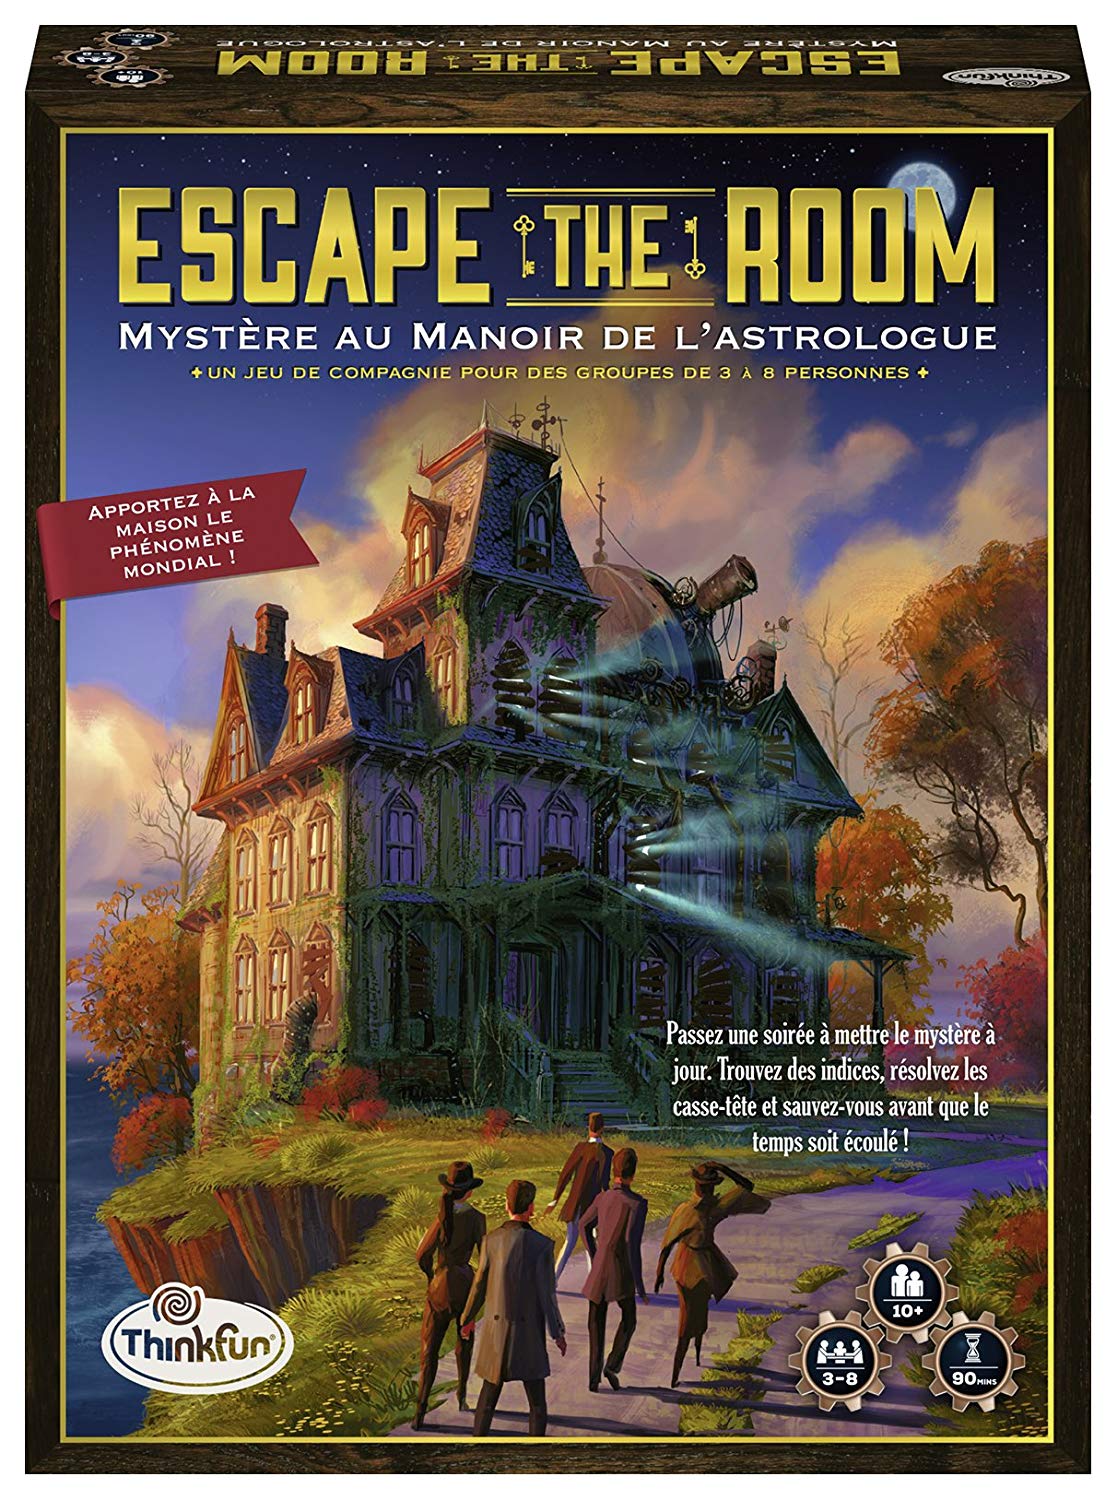 Ravensburger game – Escape The Room Myst Orchid Fertiliser Manoir, 76315